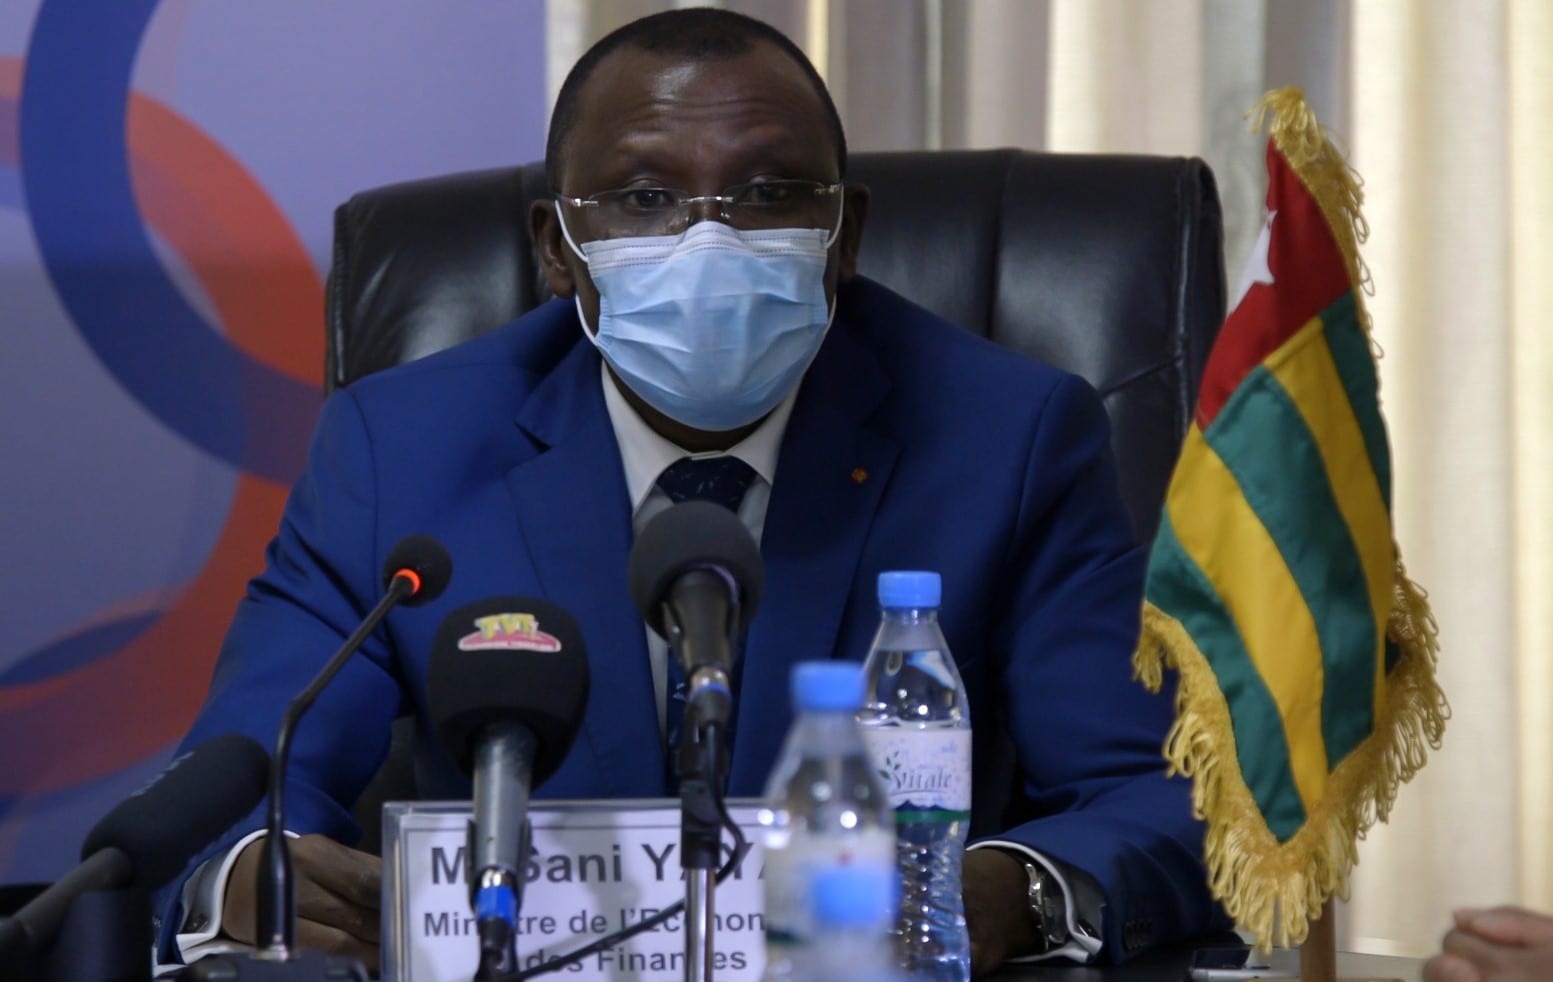 Togo: Le Ministre Sani Yaya Met En Garde Les Sociétés De Trading